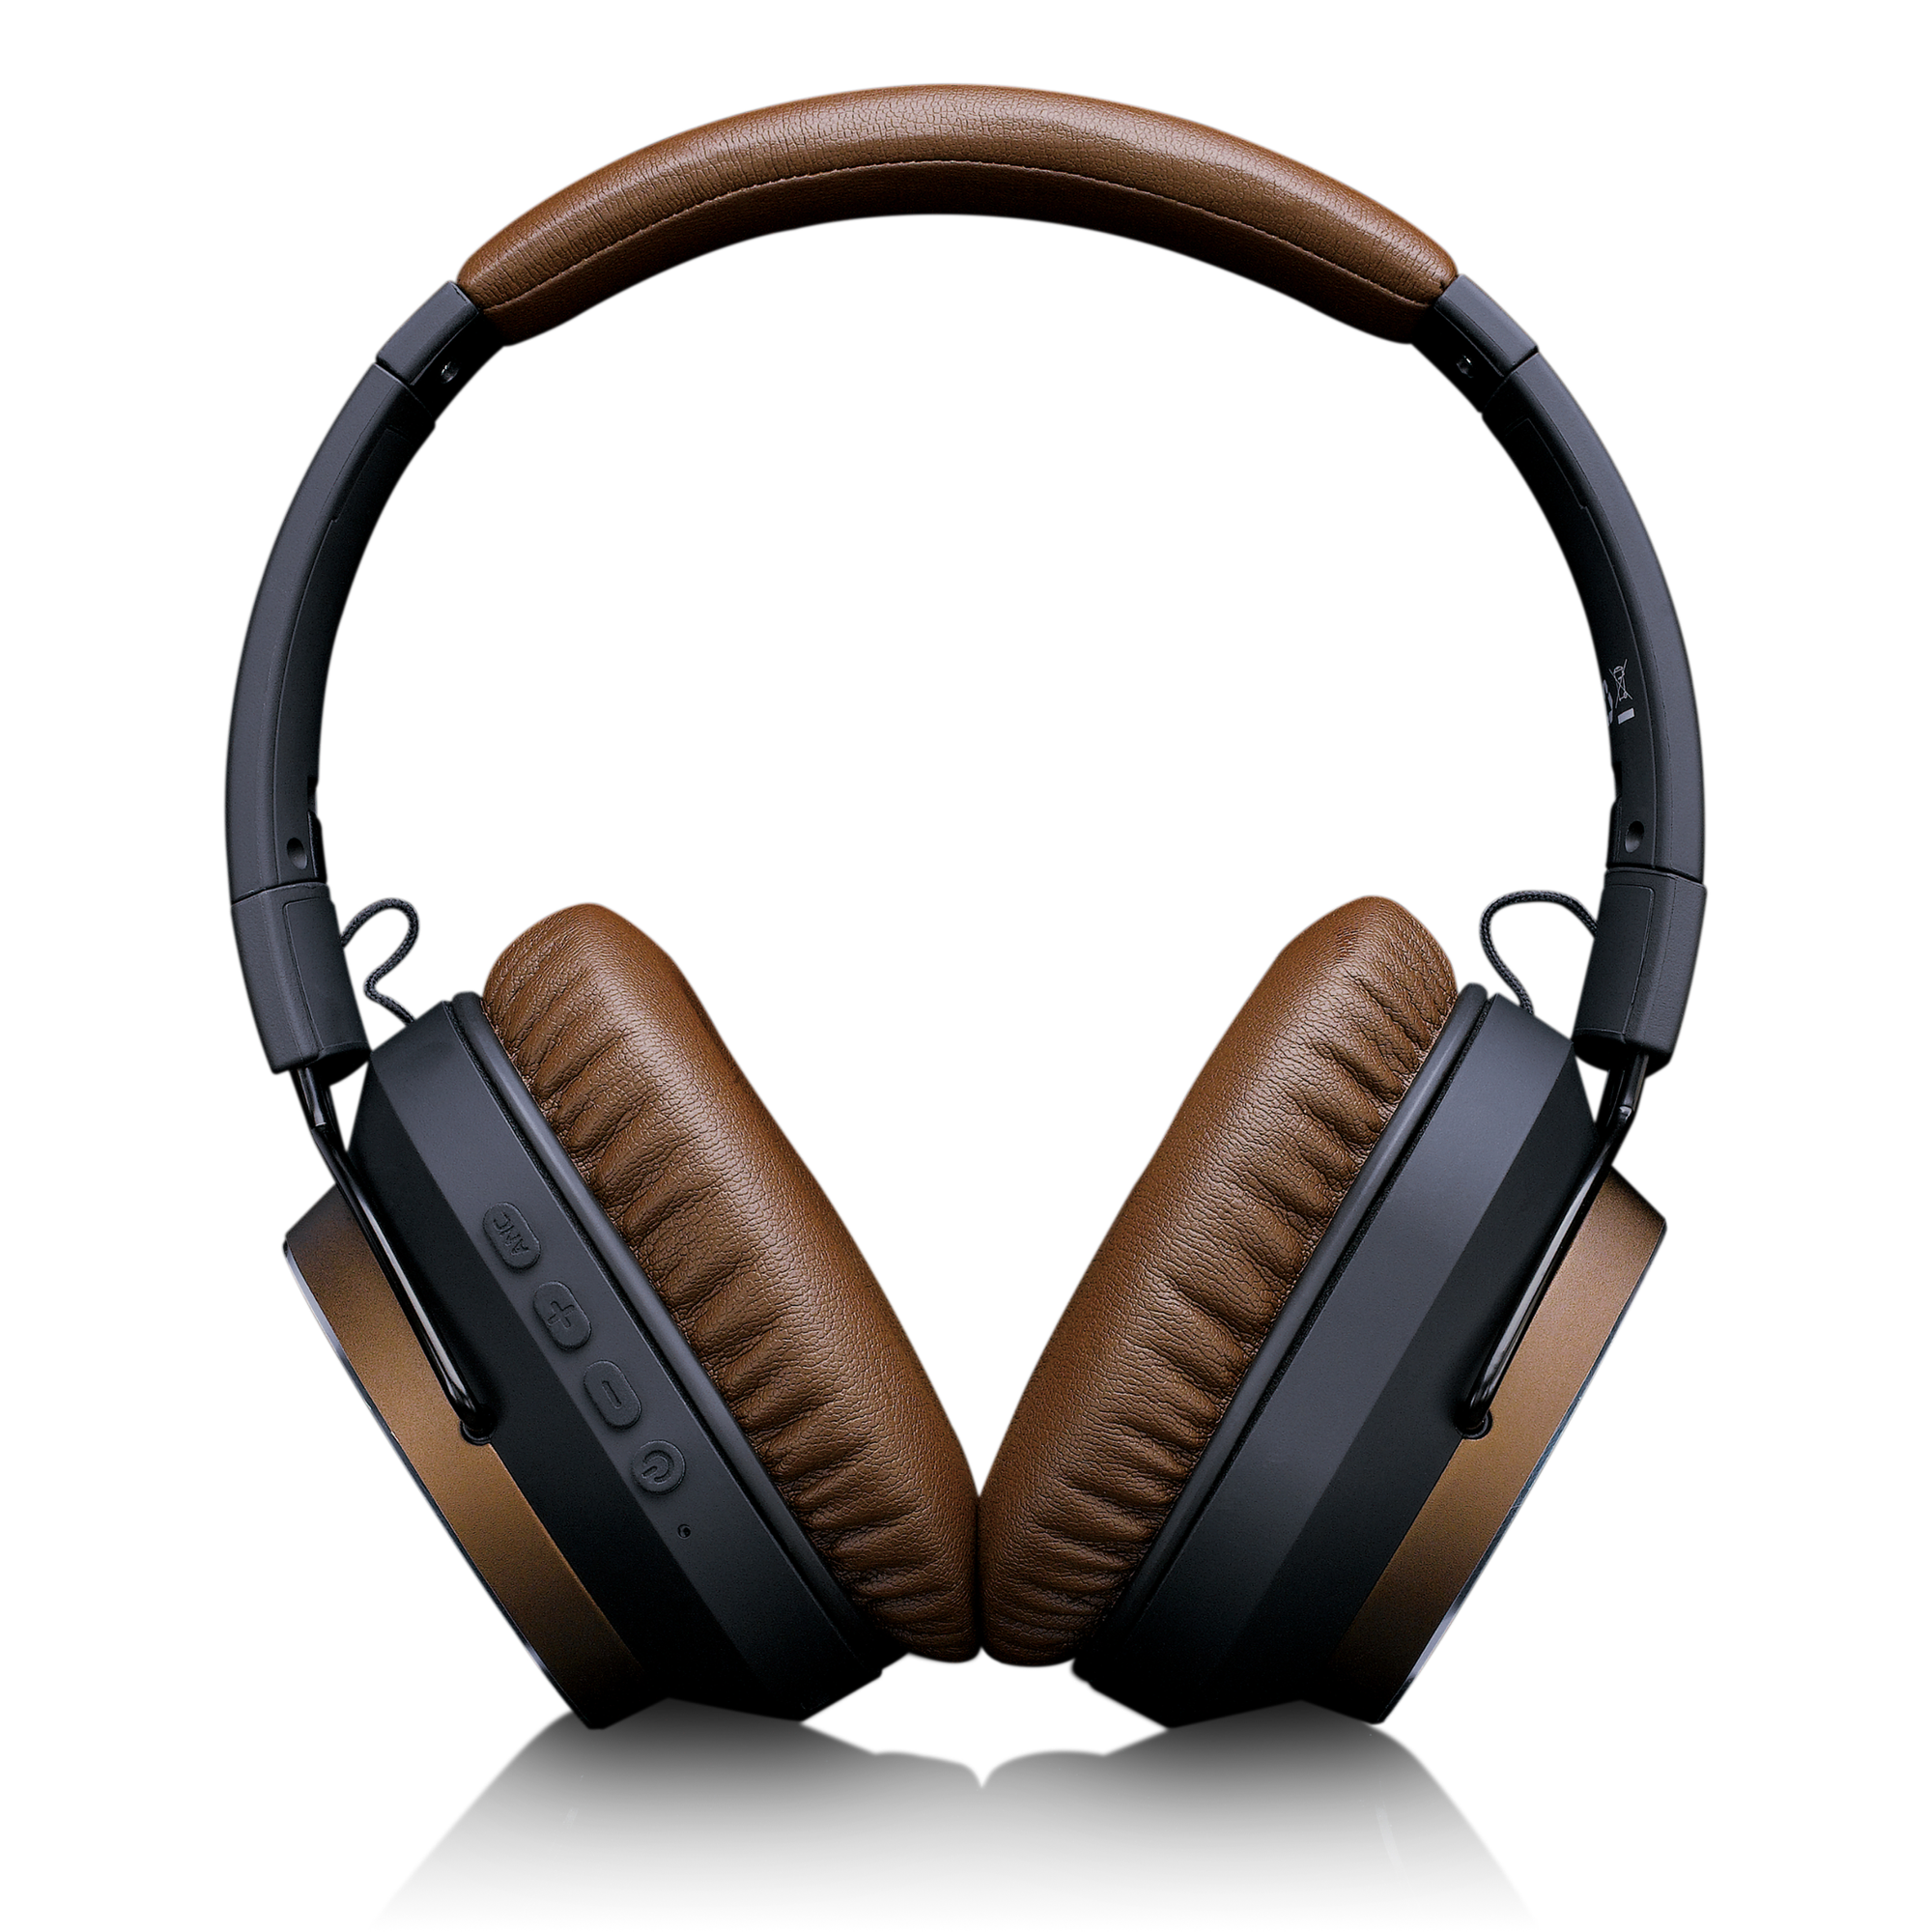 LENCO HPB-730BN - Active Noise Braun-Schwarz (ANC) Over-ear -, Bluetooth Cancelling Bluetooth Headphone